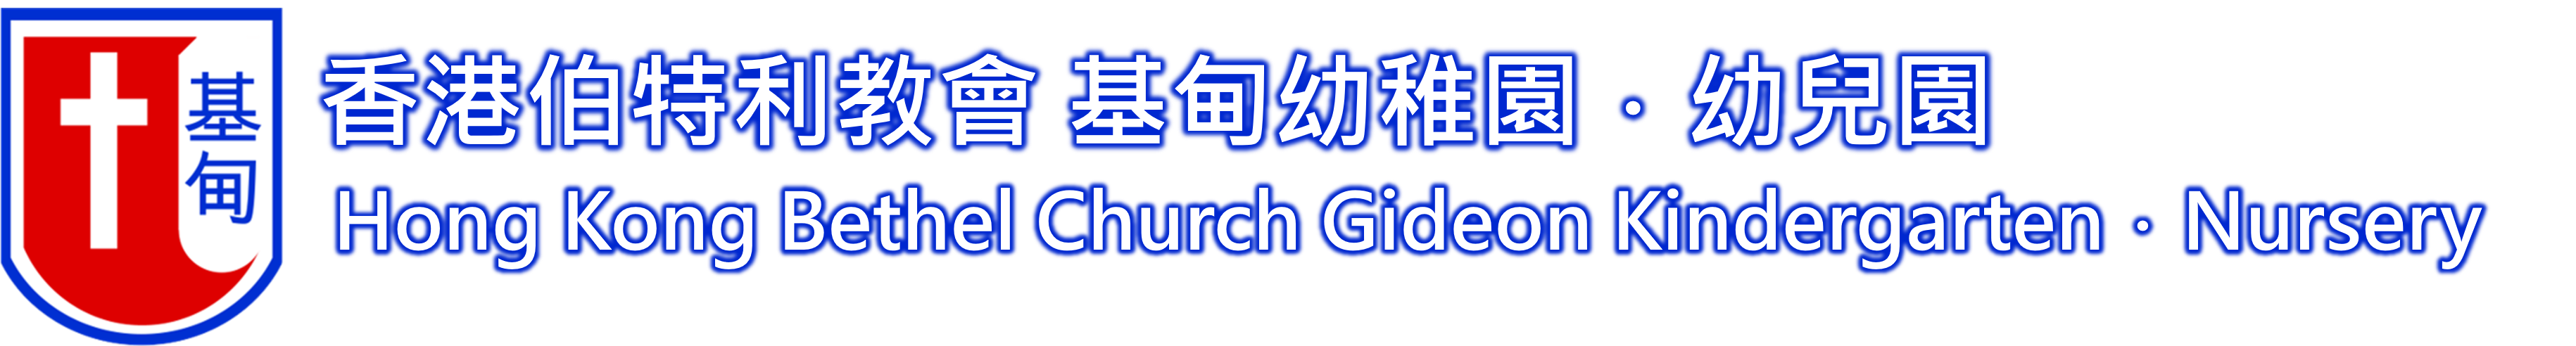 基甸幼稚園 logo for desktop